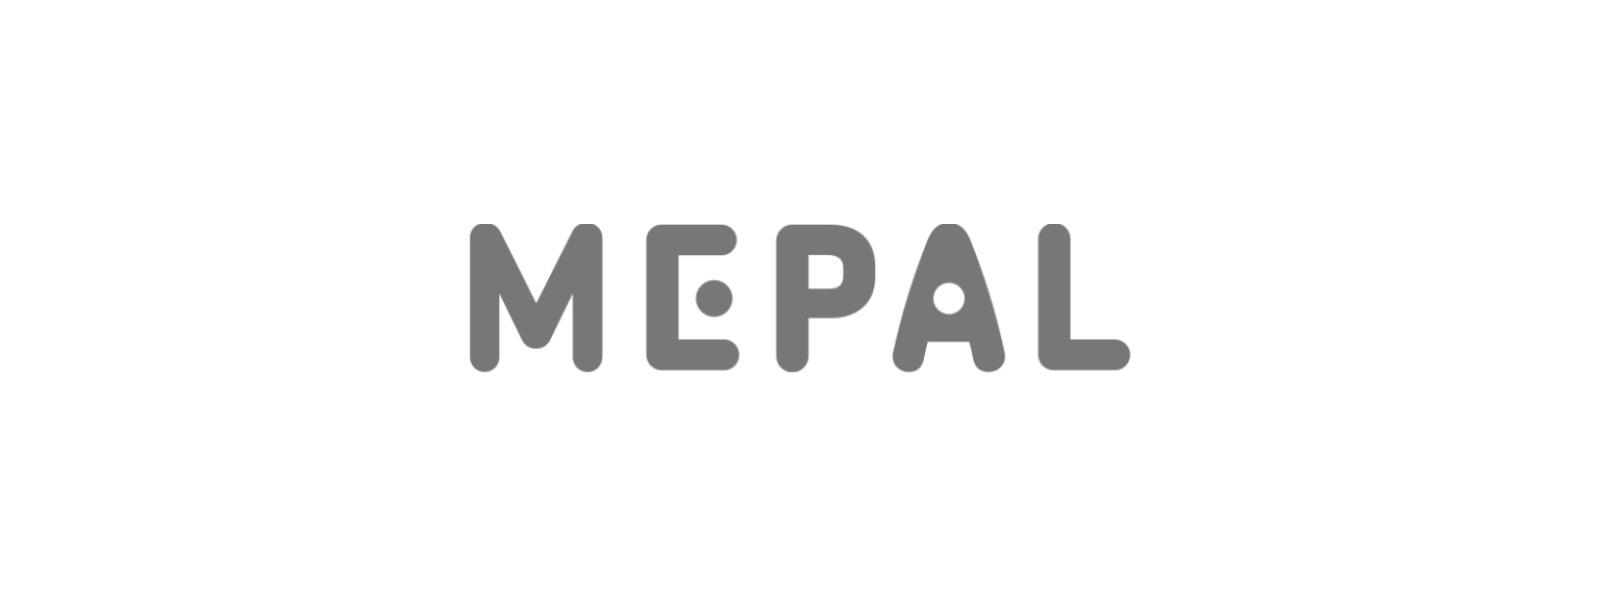 Mepal